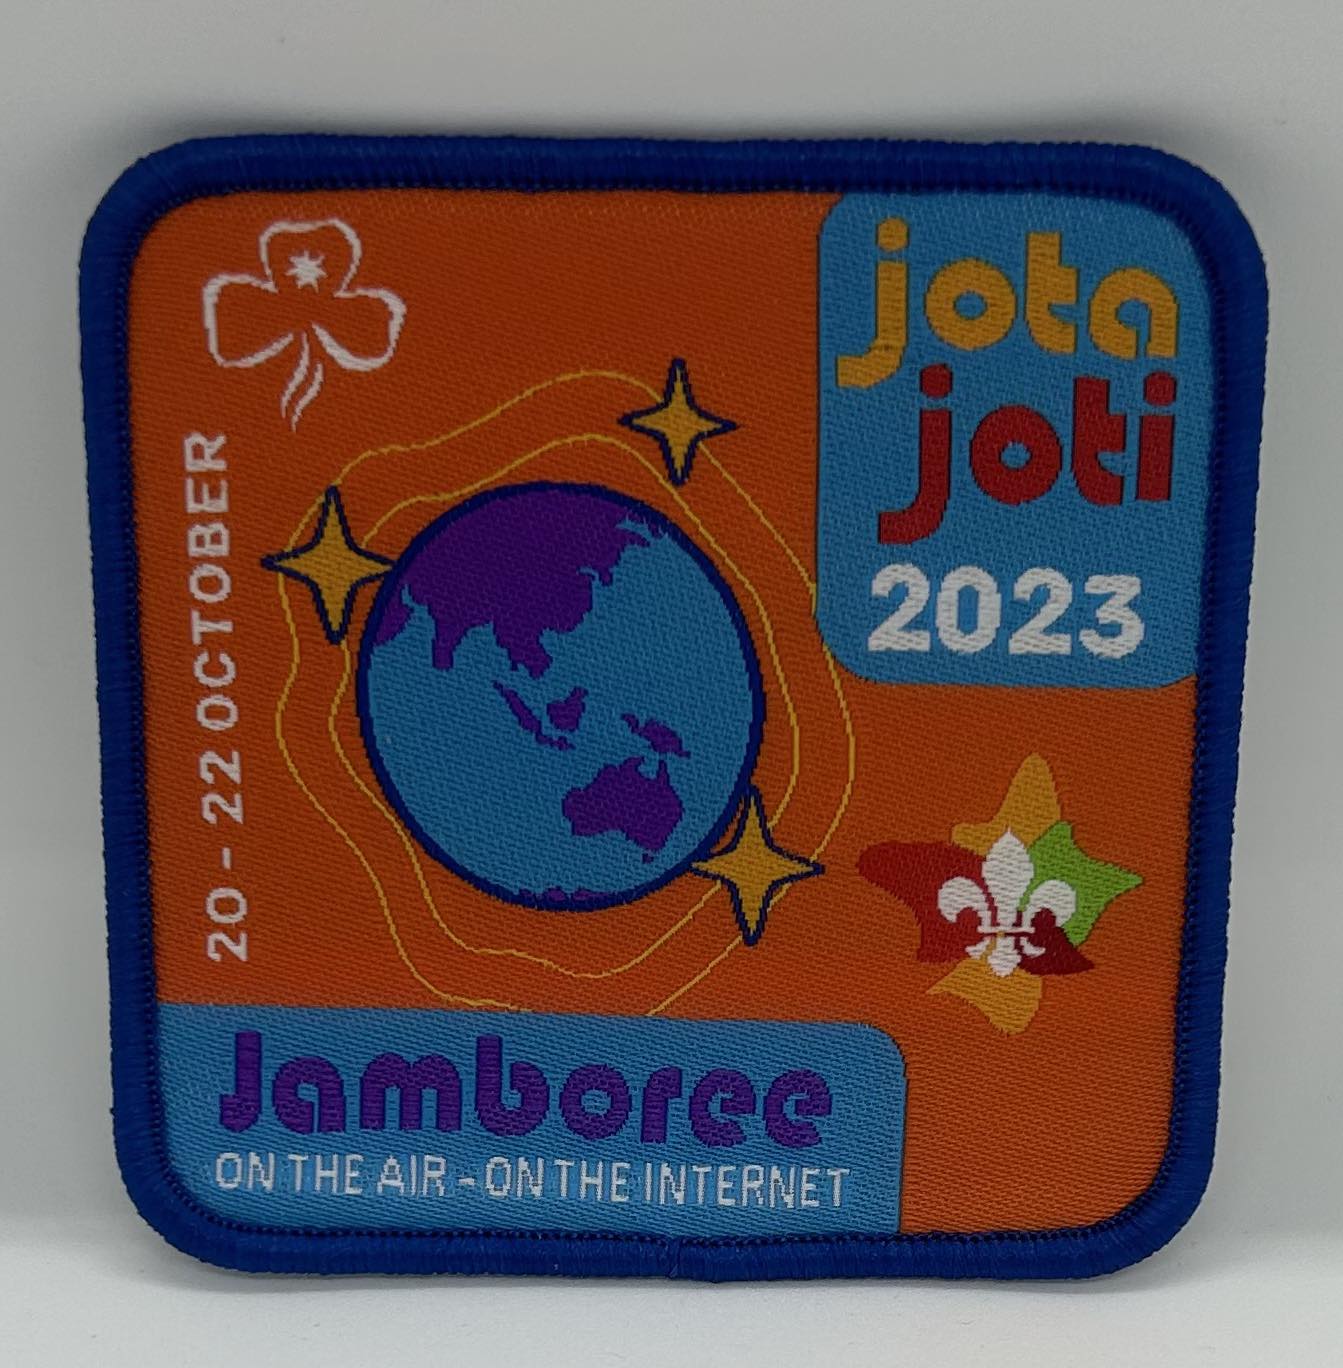 a square bound badge celebrating Jota Joti 2023